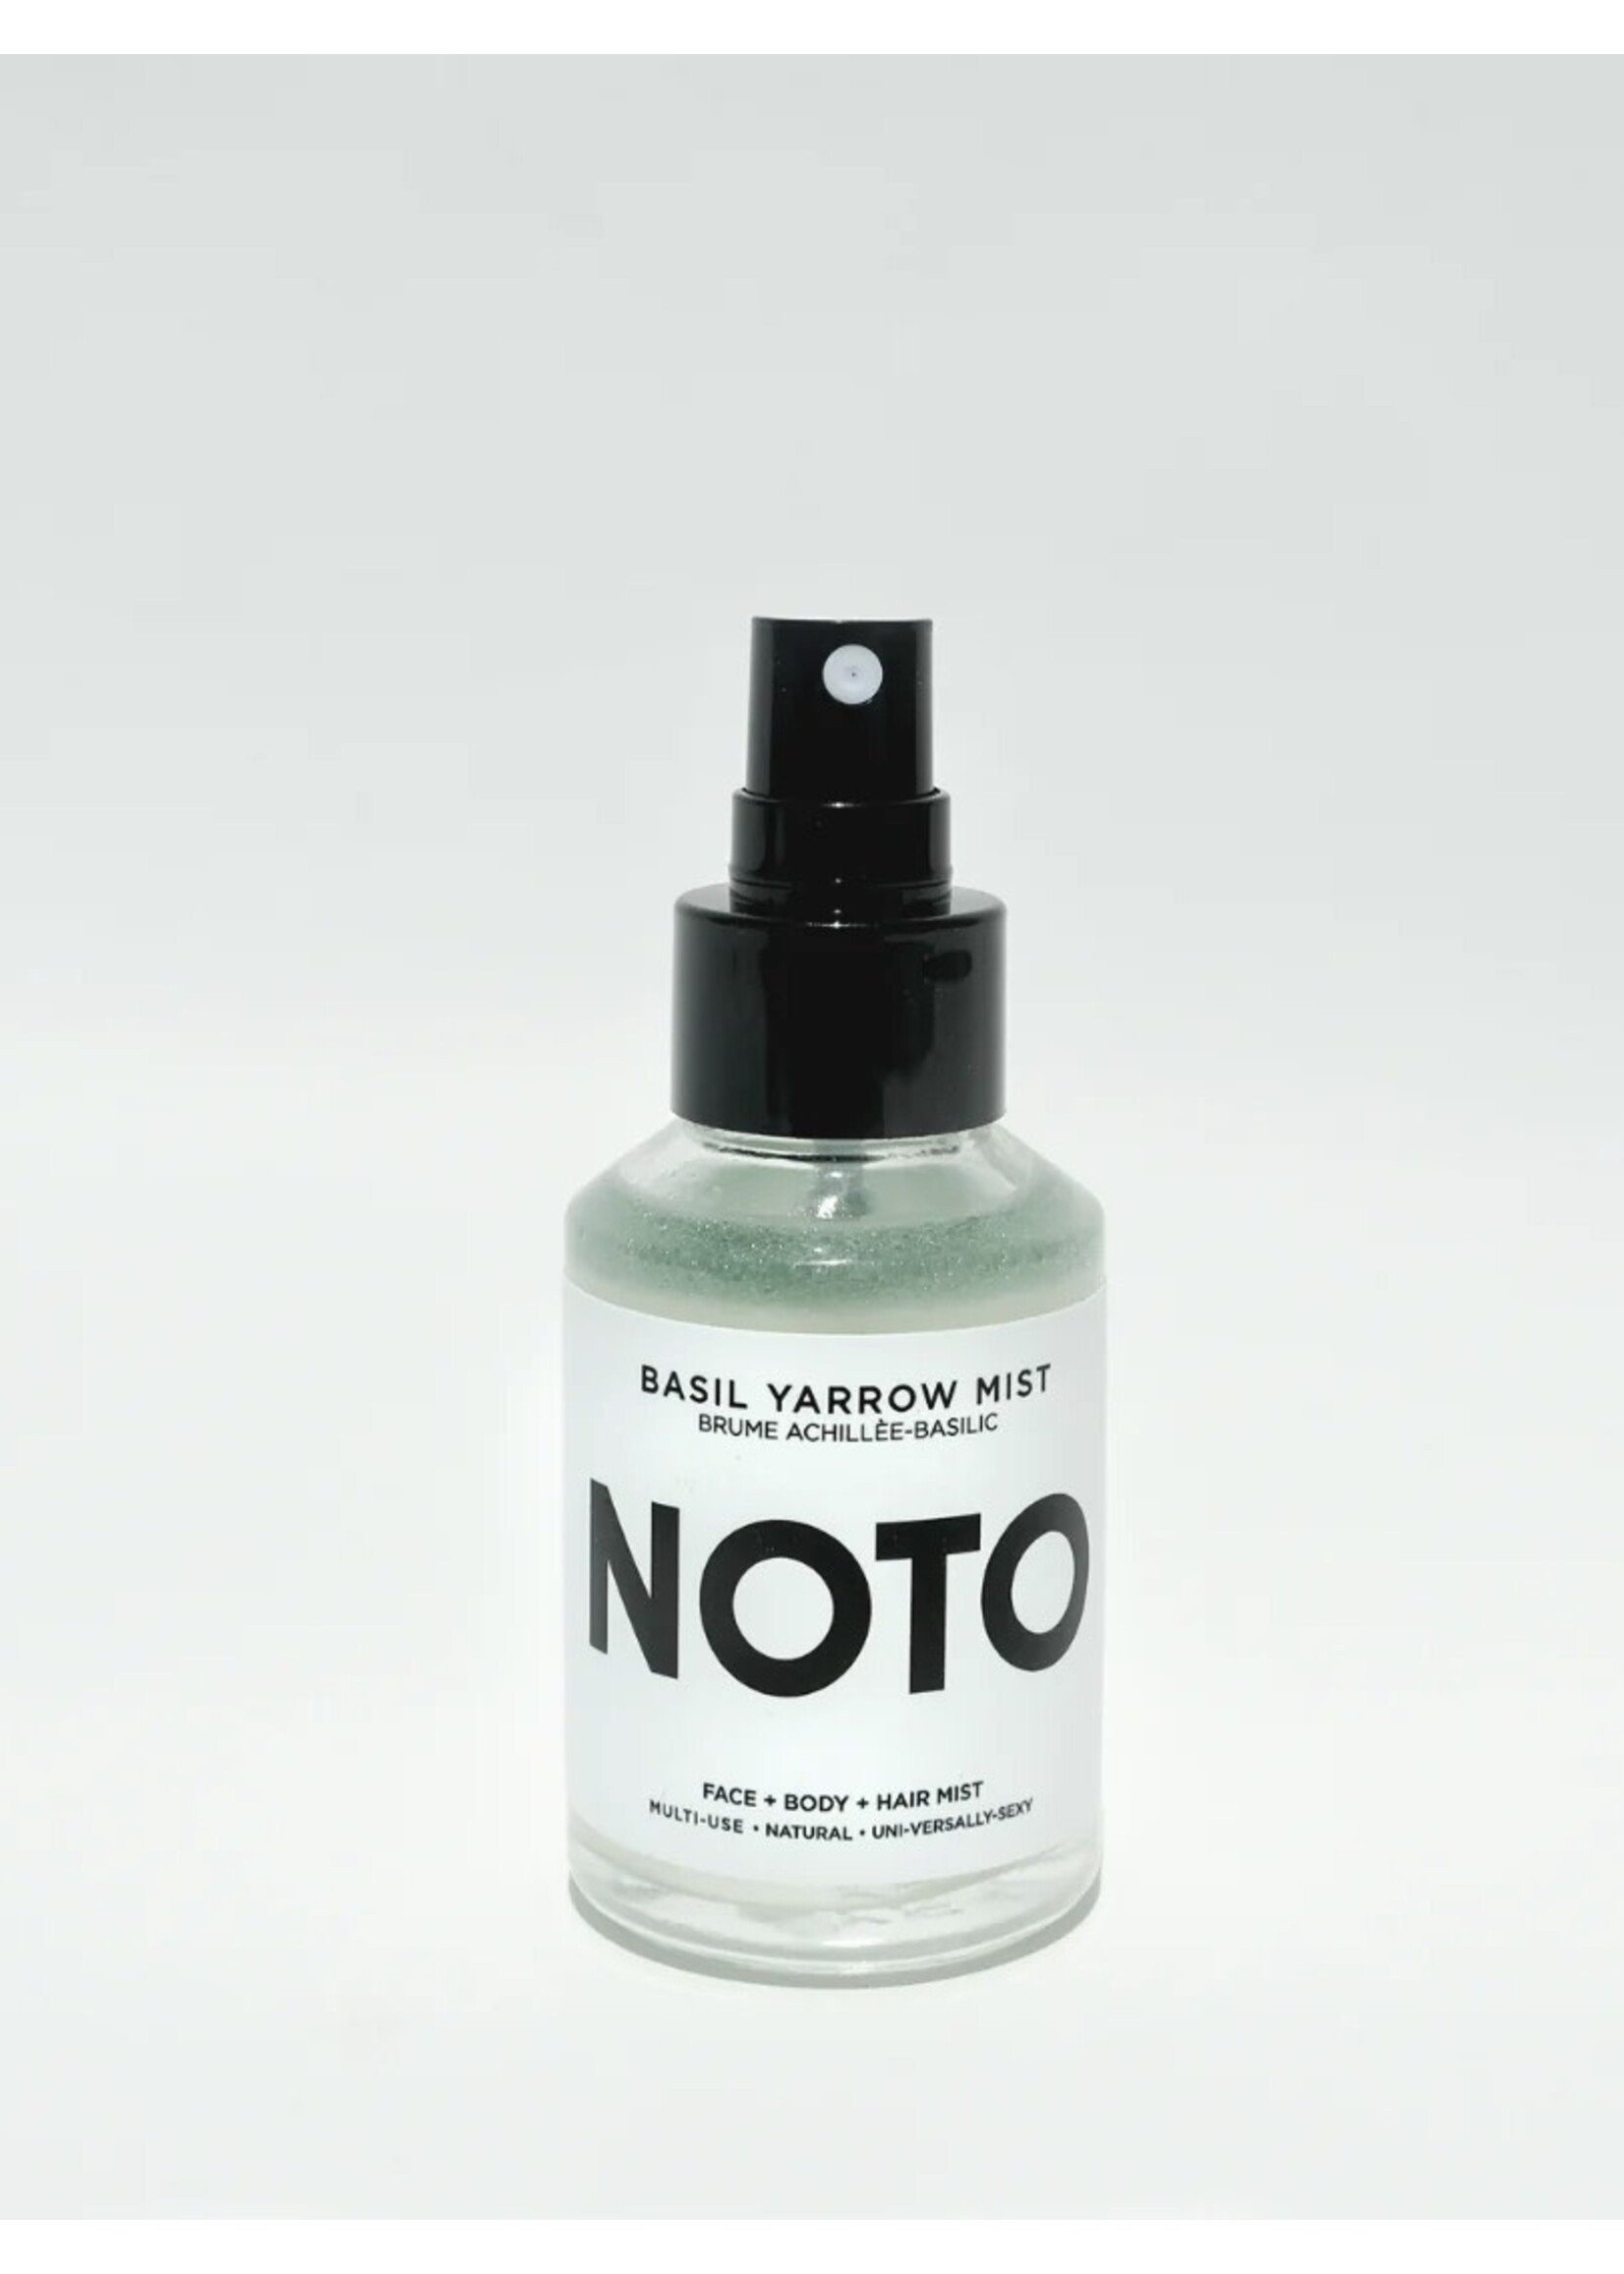 Noto Botanics Hydrating mist for face + body + hair "Basil Yarrow" by Noto Botanics